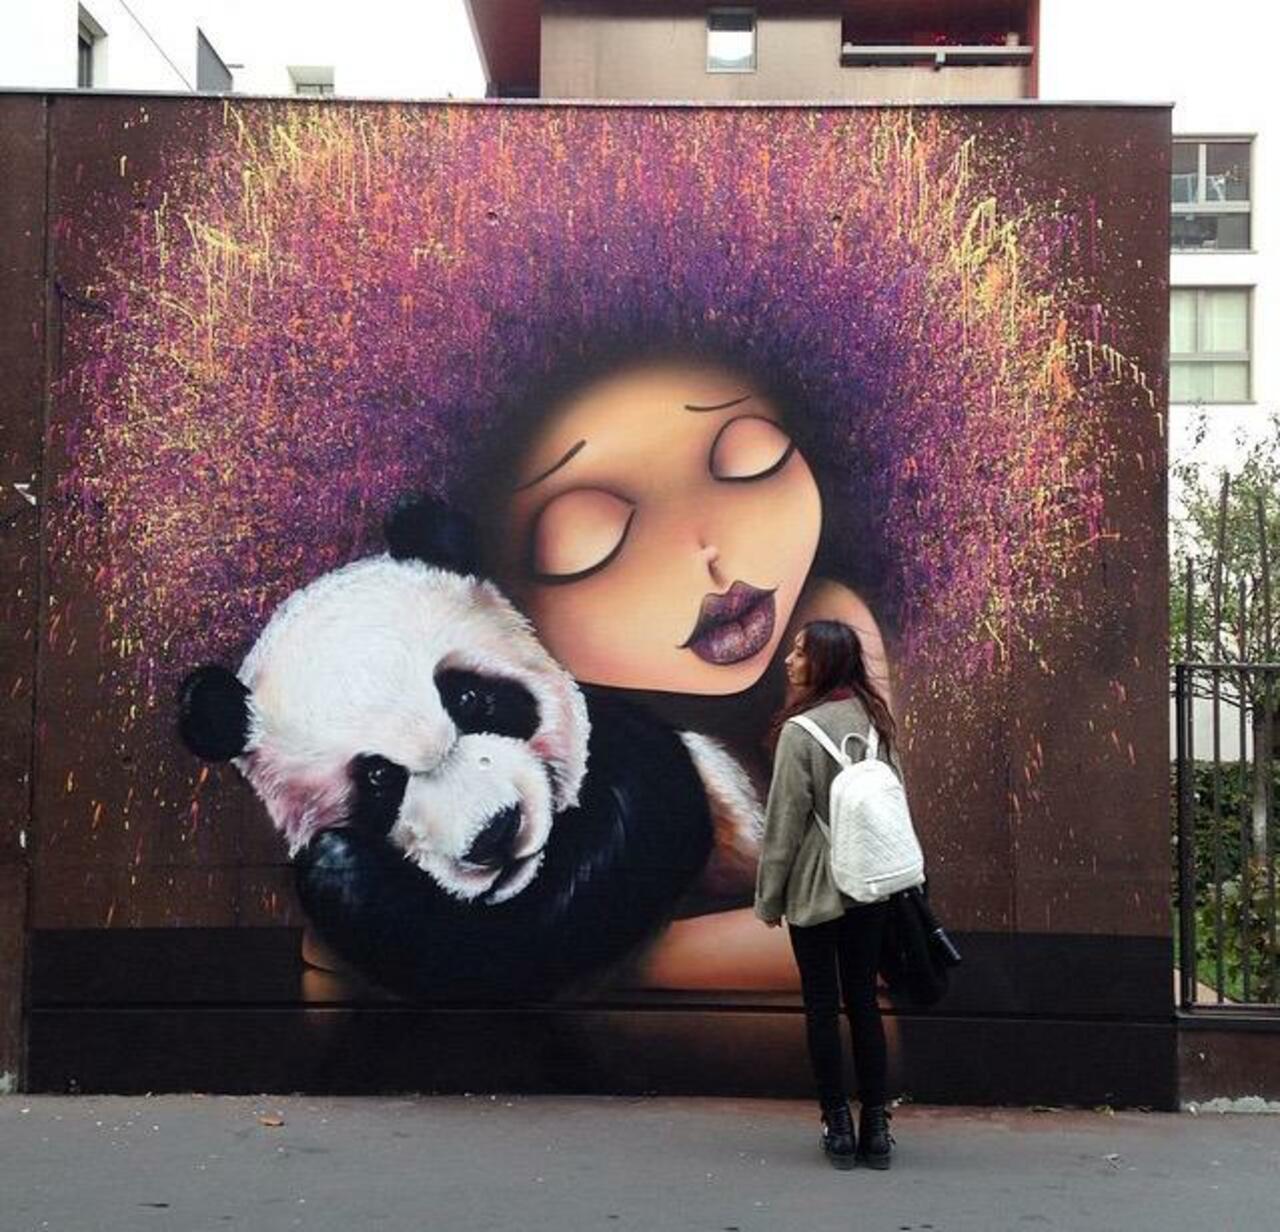 Street Art by VinieGraffiti in Paris 

#art #graffiti #mural #streetart http://t.co/4CuqoYKrHh